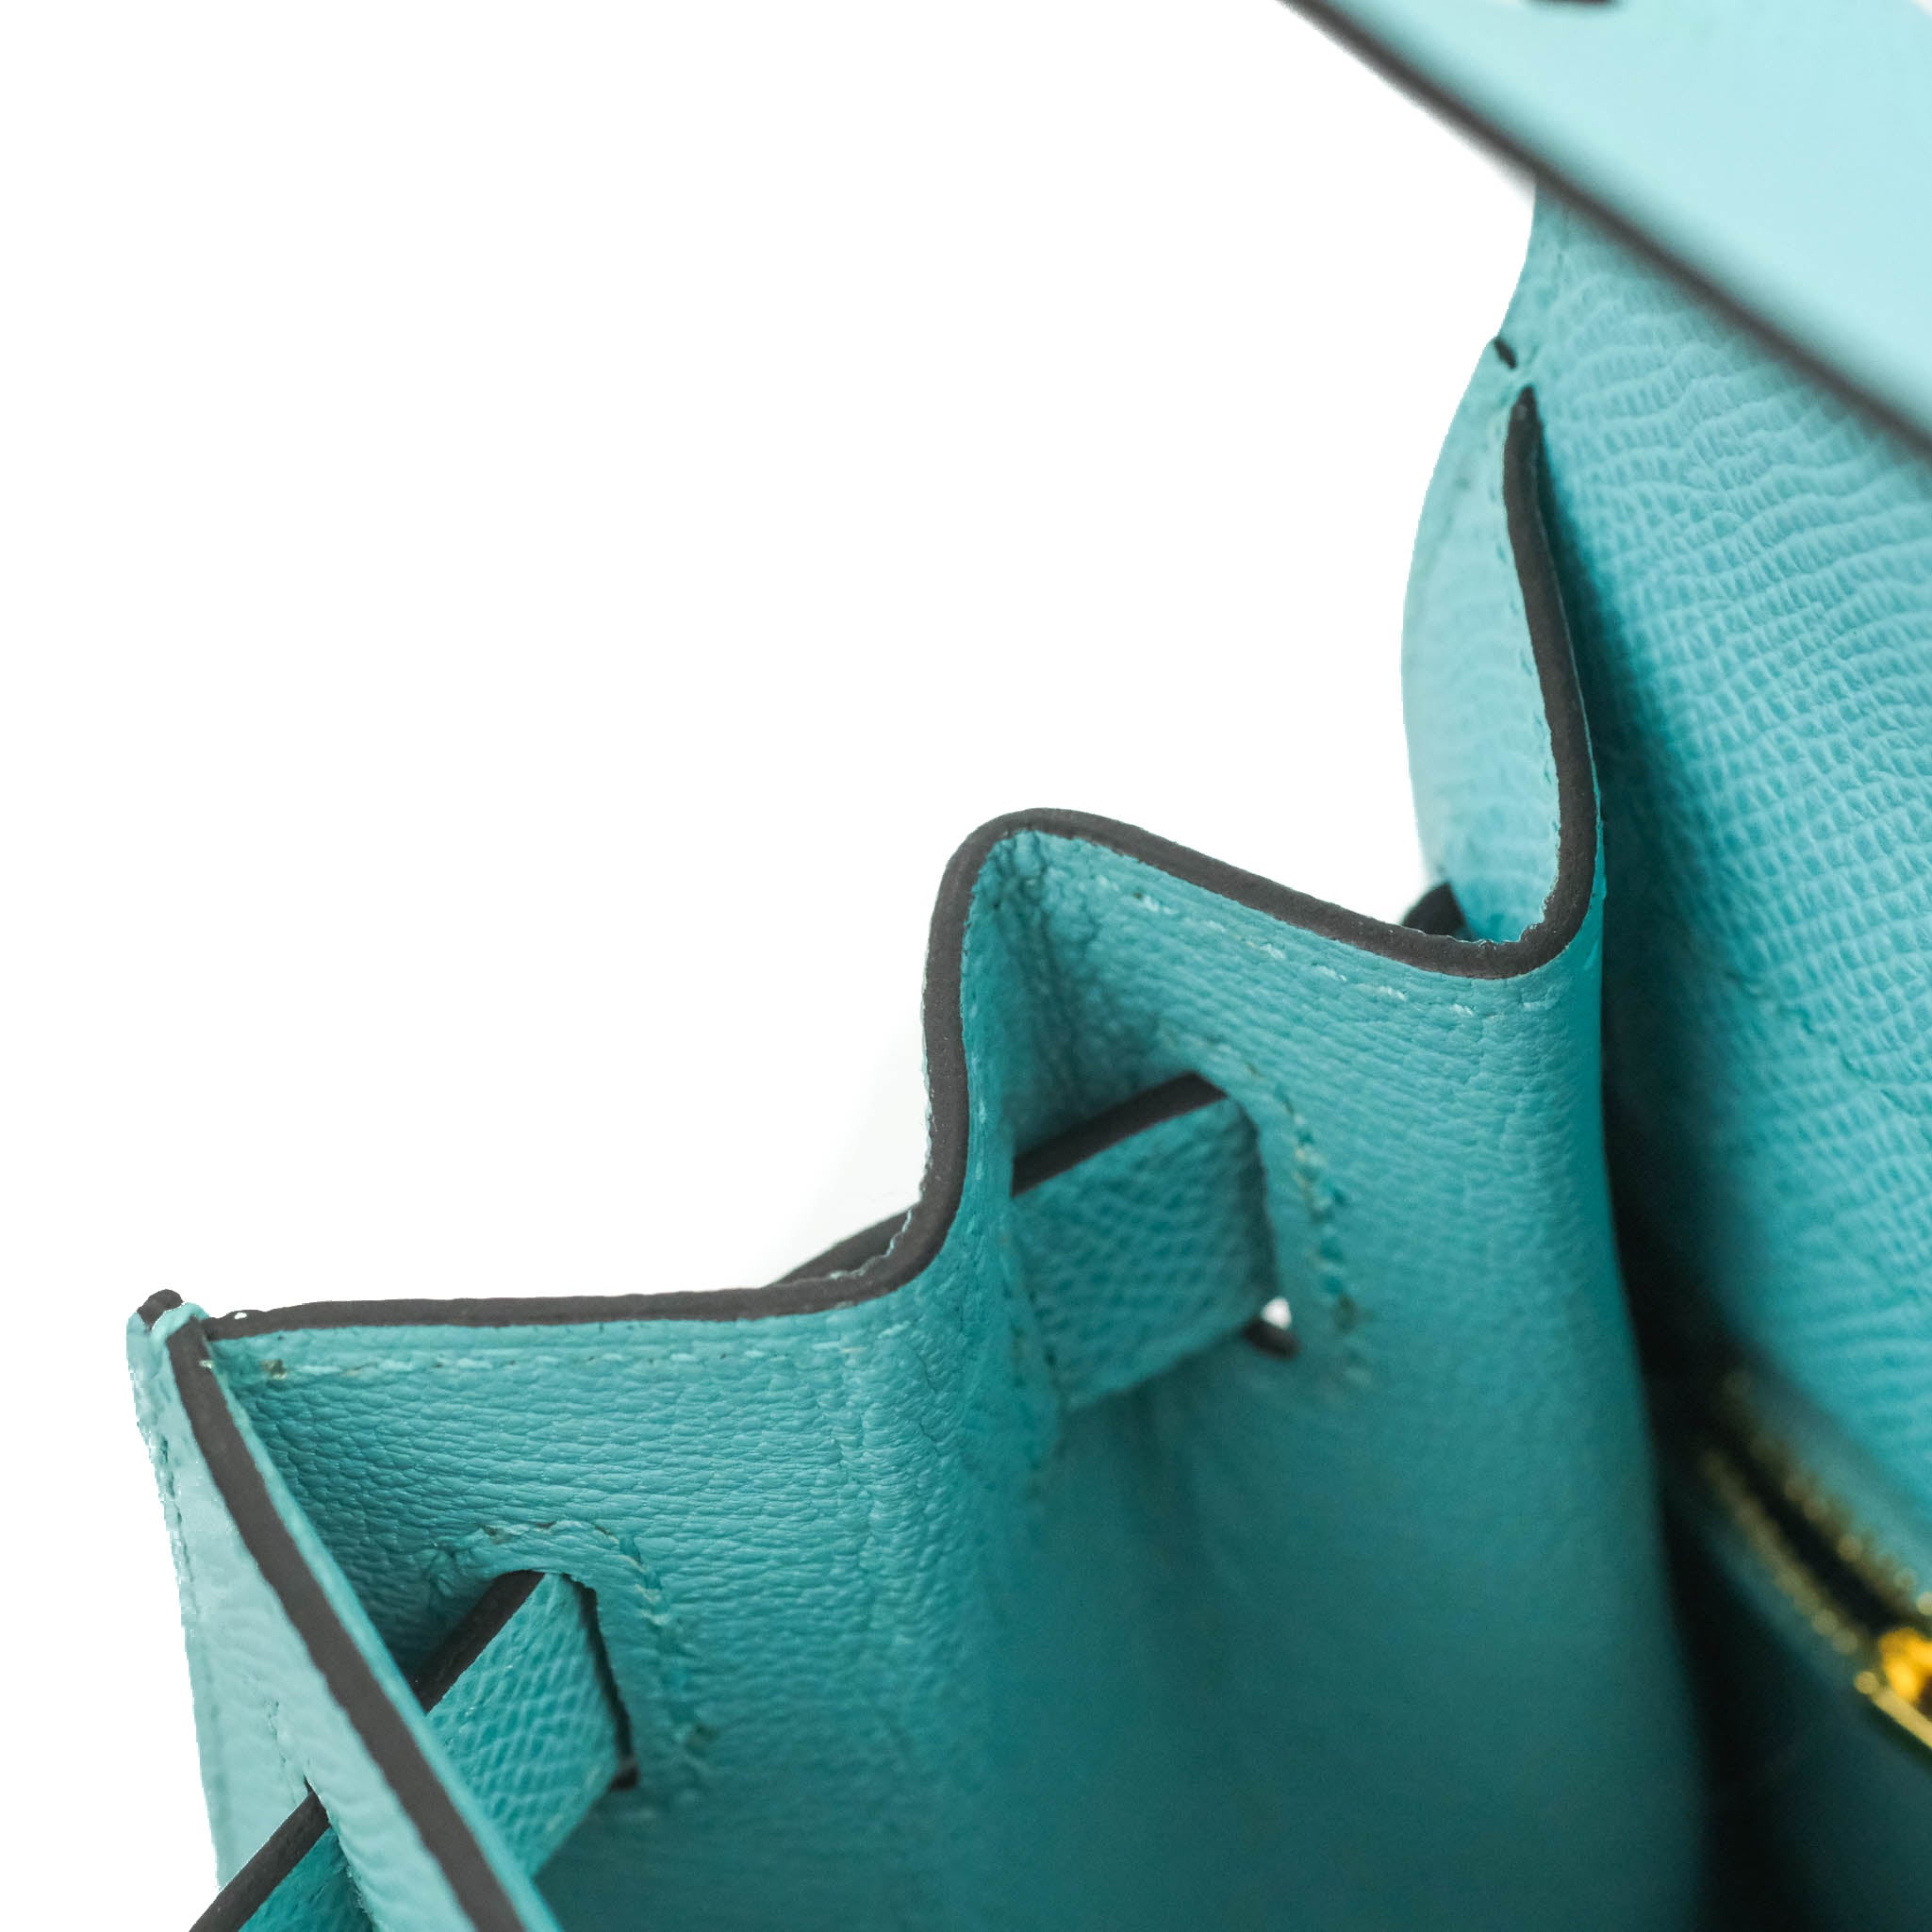 New Hermès Kelly 28 sellier handbag strap in Prussian blue Epsom